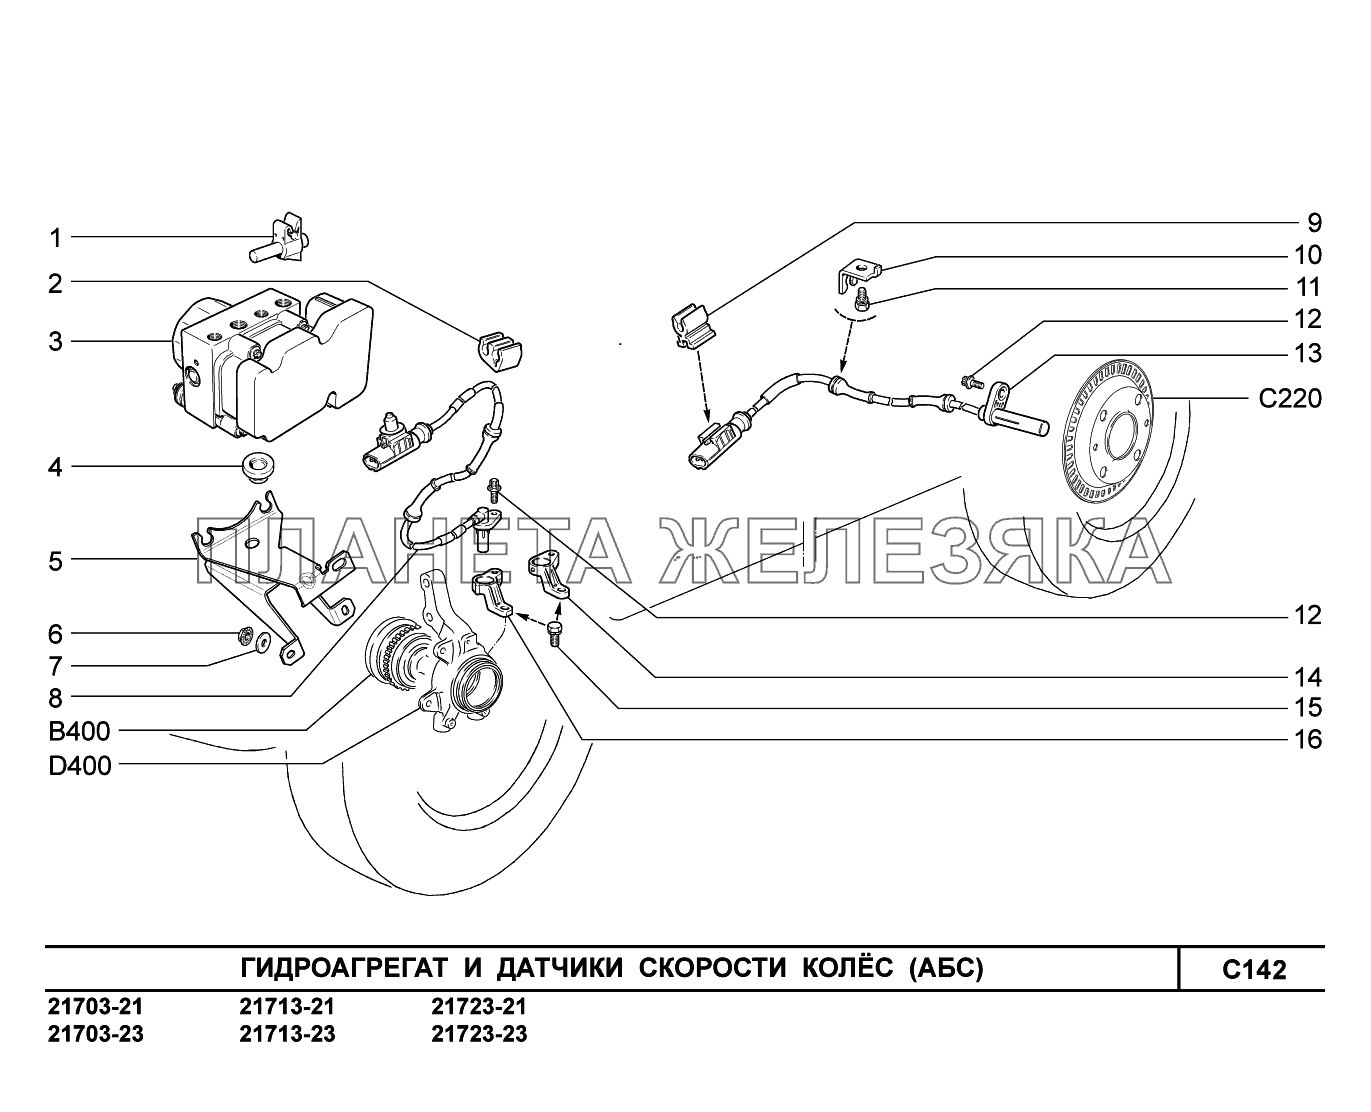 C142. Гидроагрегат и датчики скорости колес ВАЗ-2170 